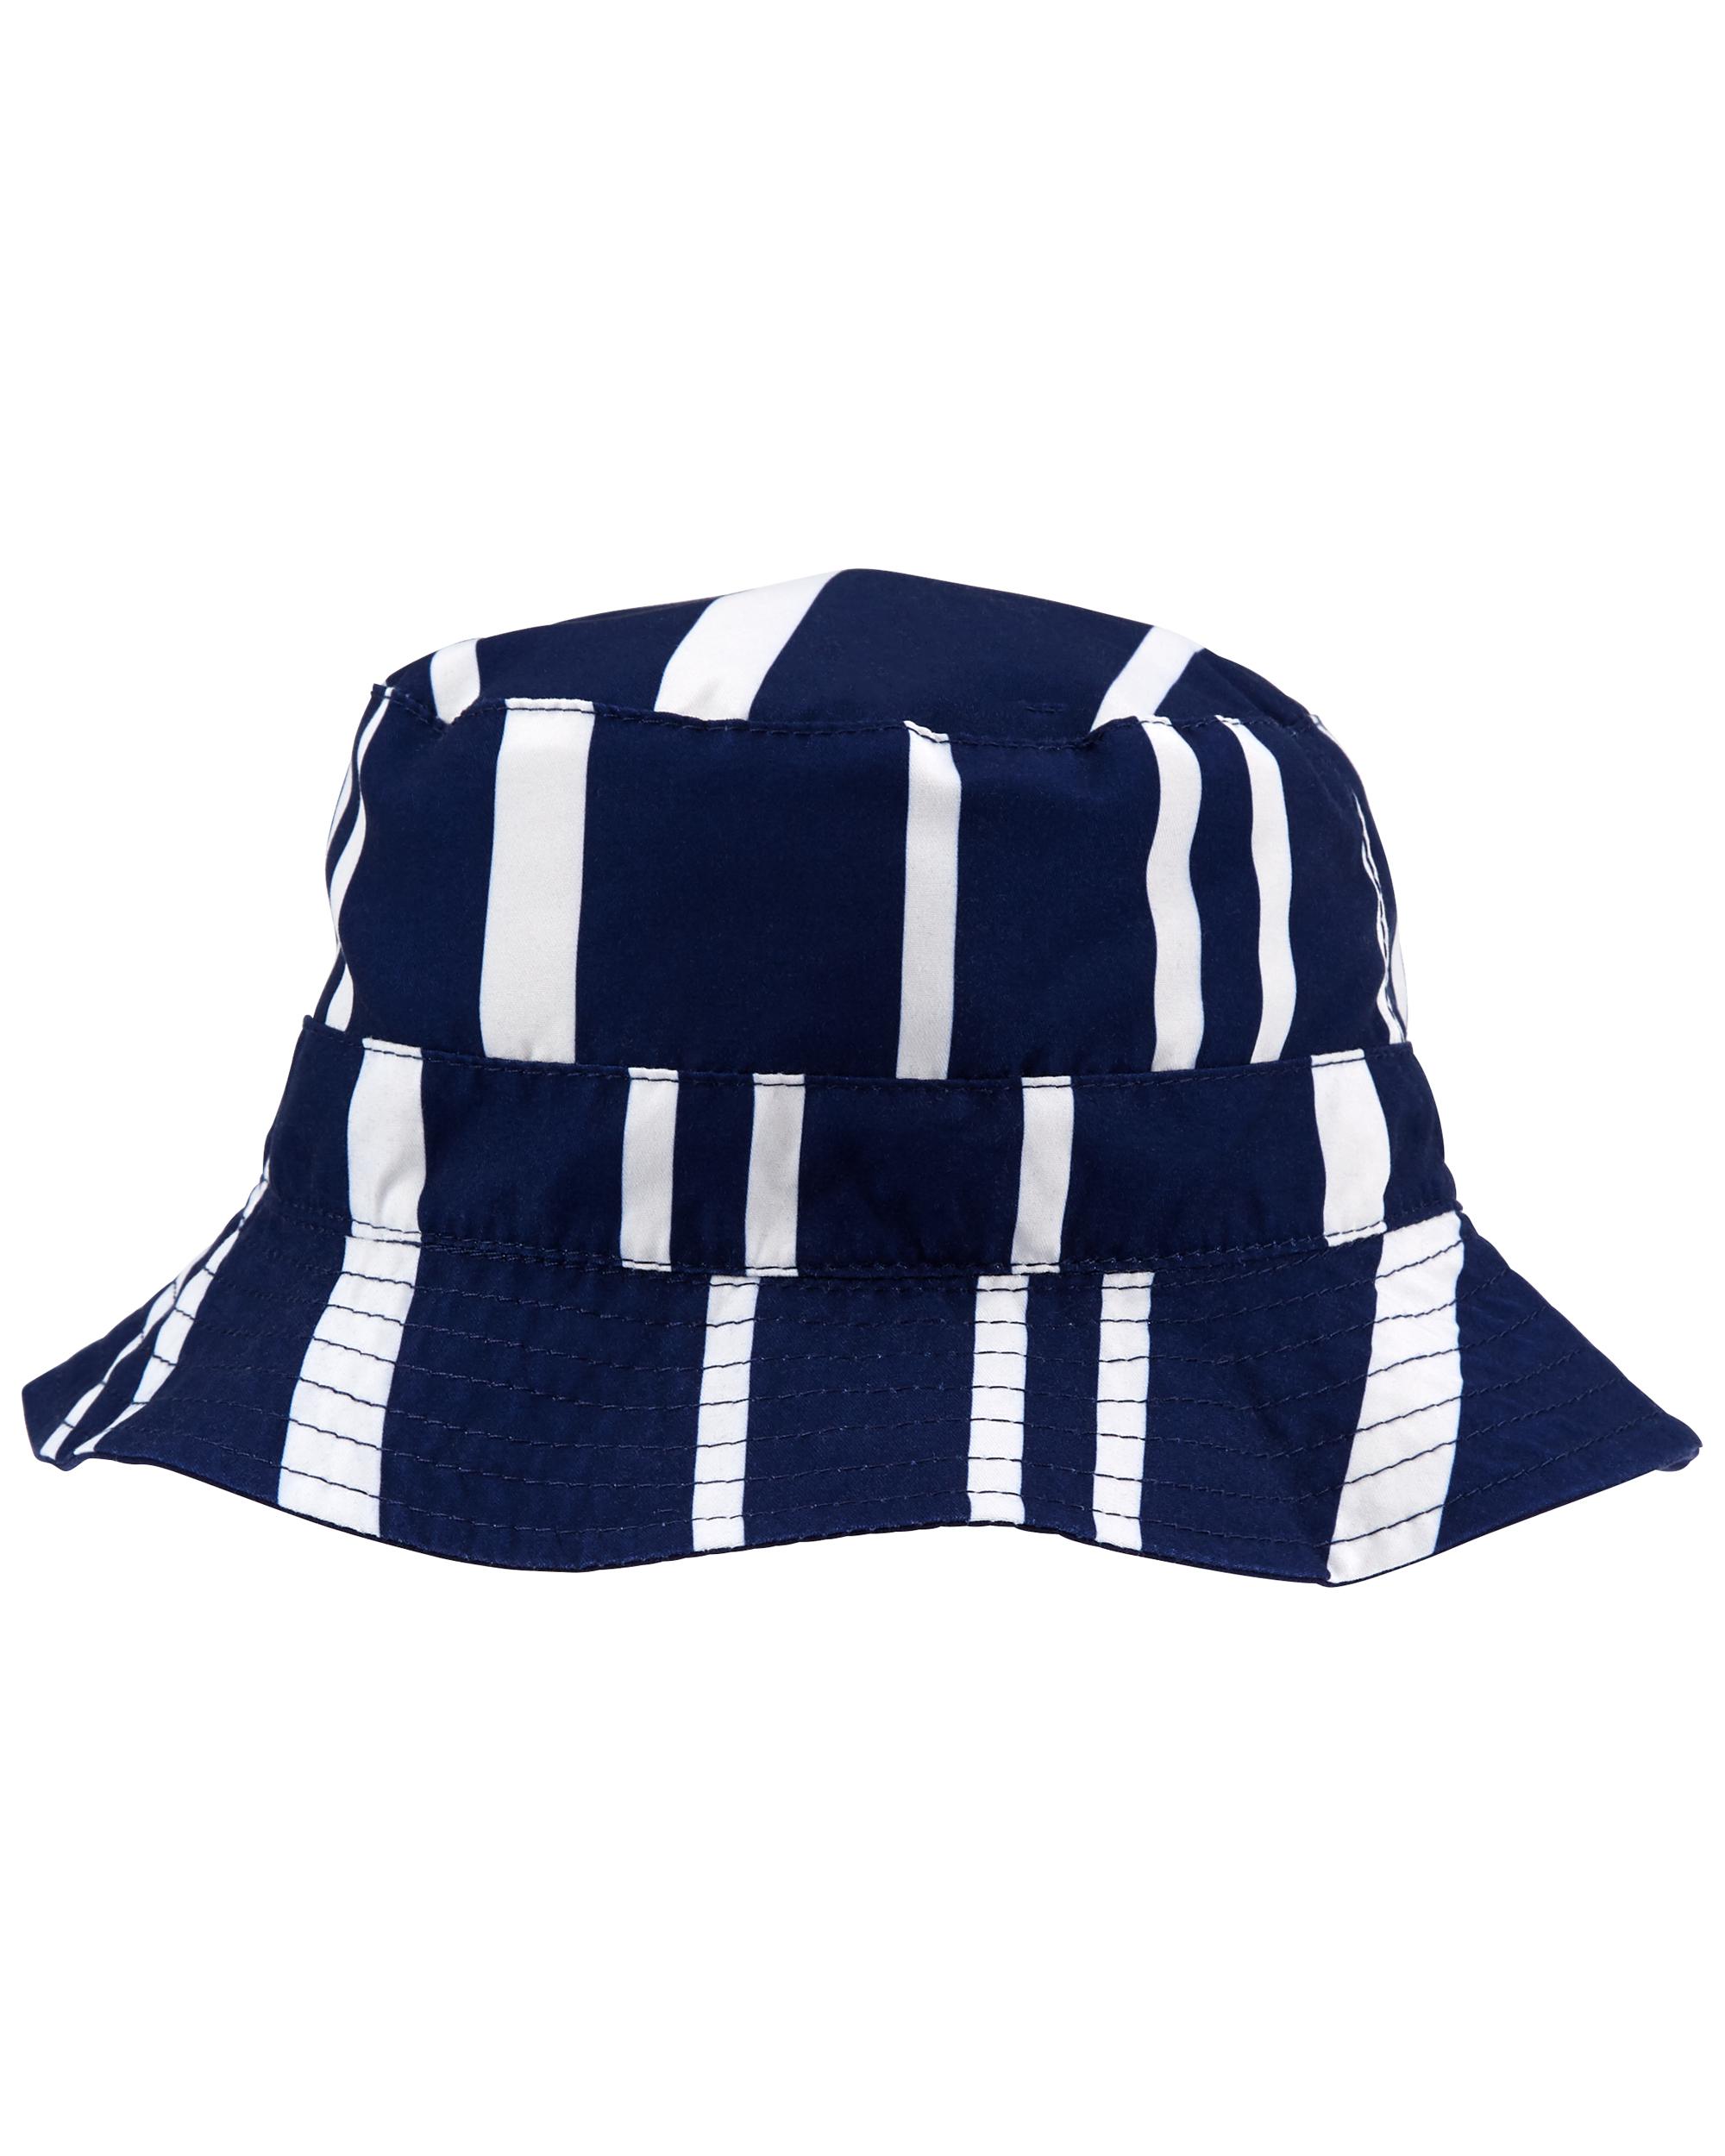 Toddler Striped Reversible Bucket Hat